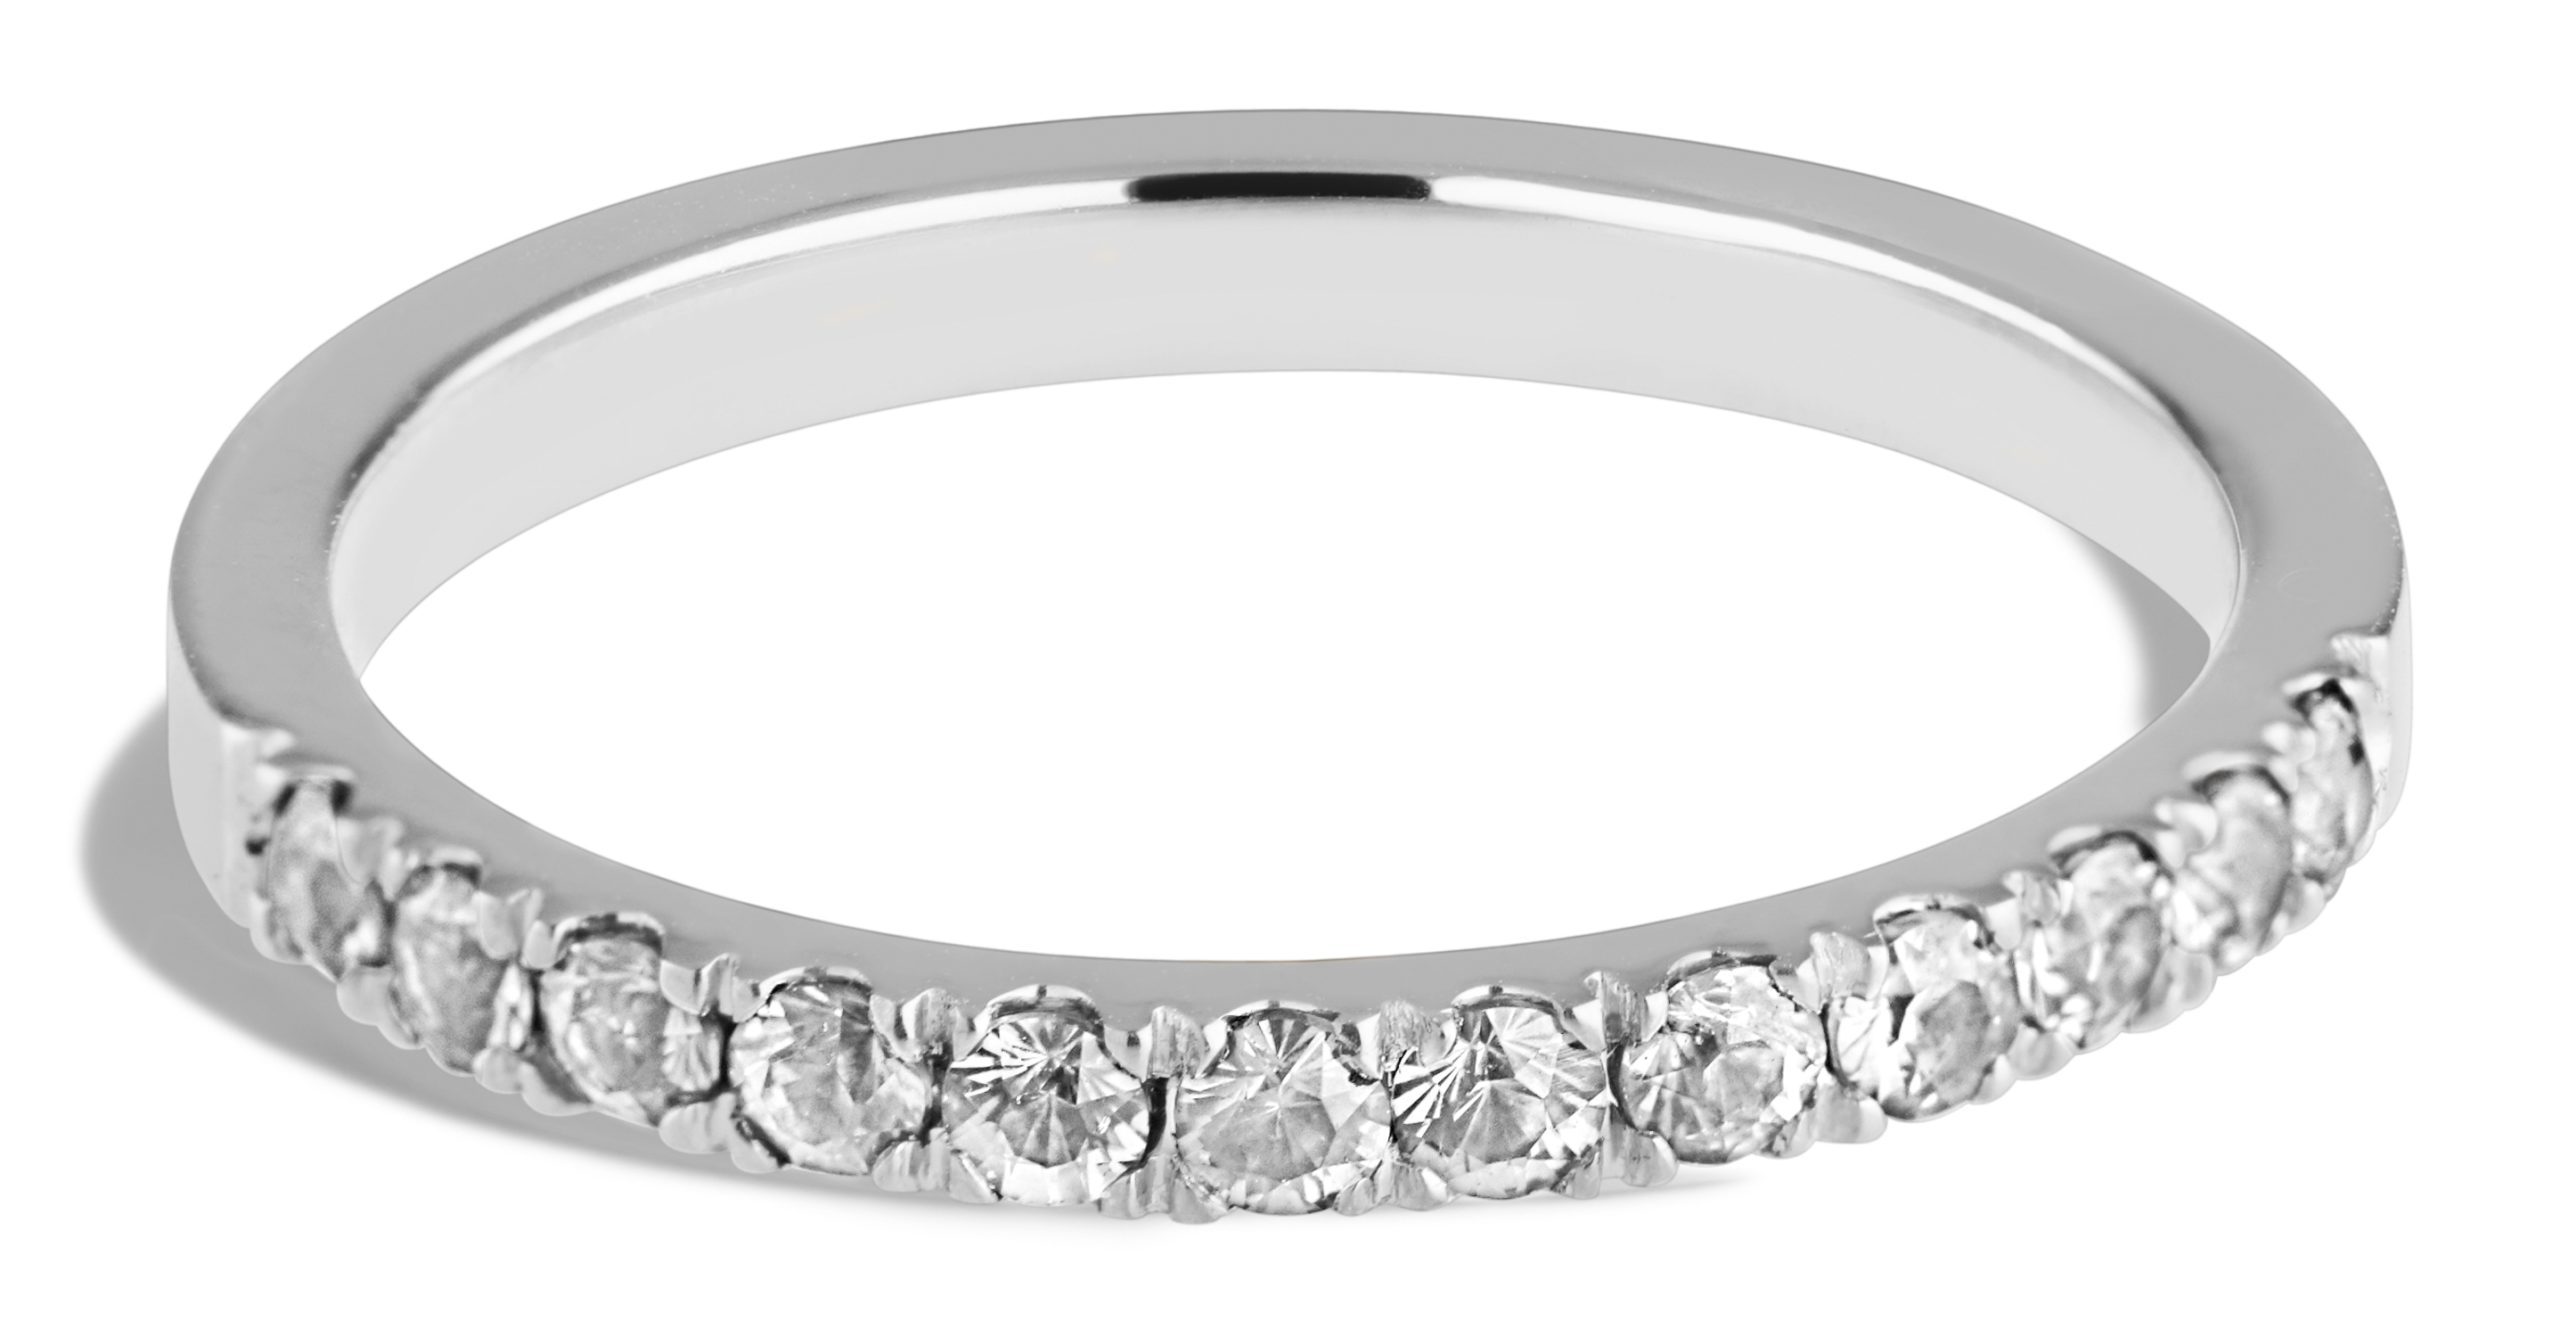 MDR170077-3.75 0.75 CTW Round Diamond Bar Set Semi-Eternity Wedding Band  Ring in 14K White Gold - Size 3.75 - Walmart.com